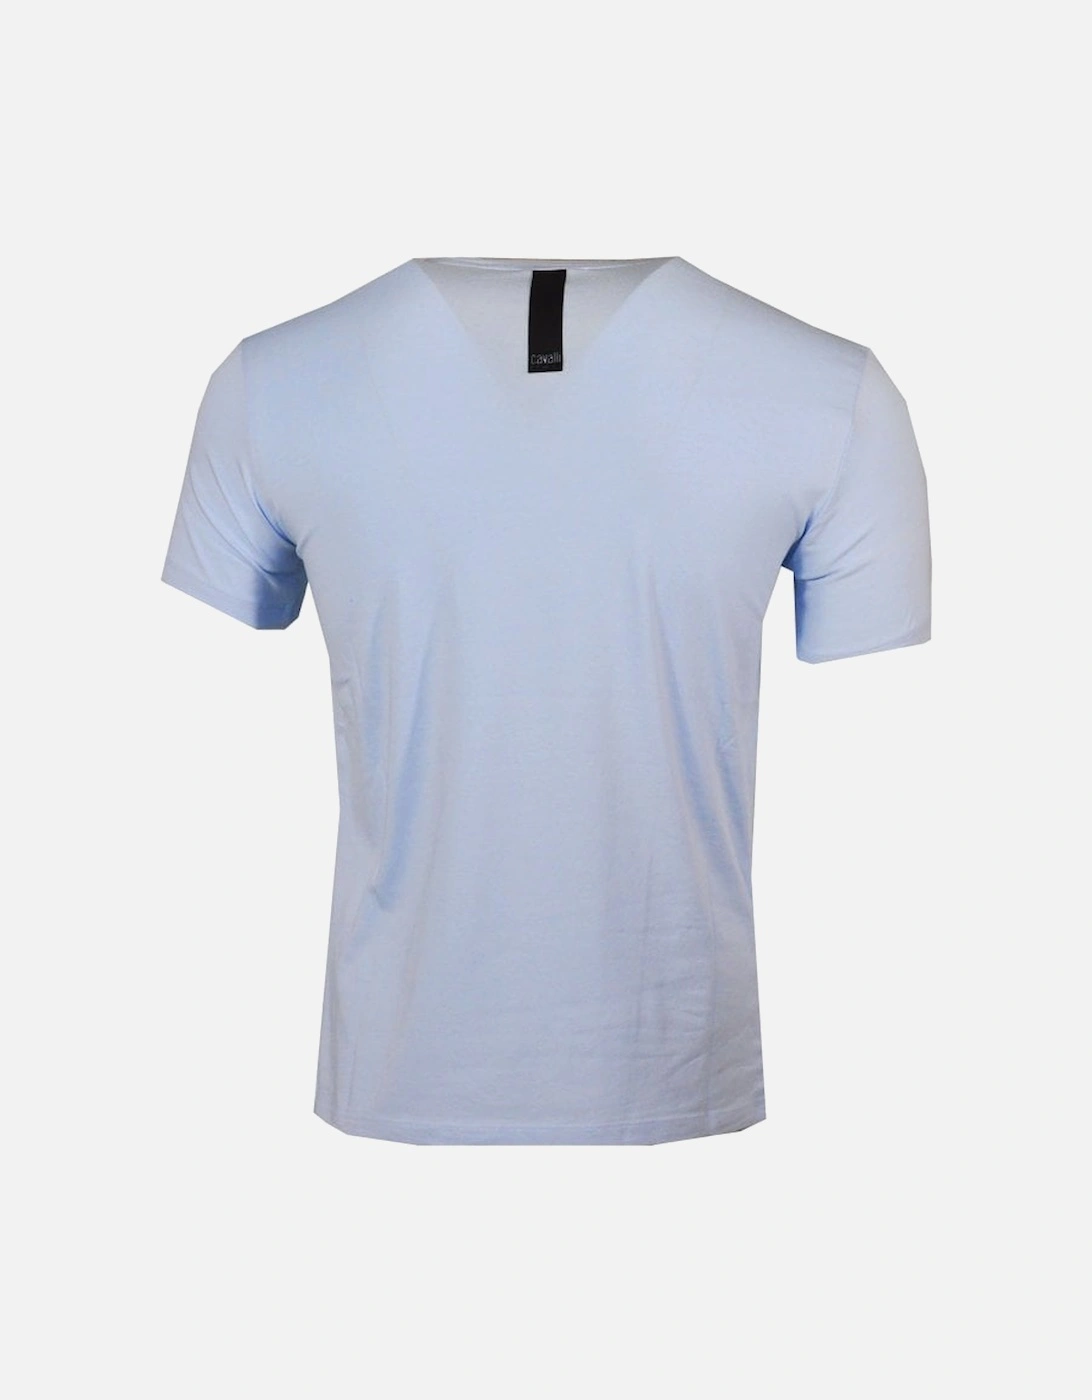 Cavalli Class Raised Logo T-Shirt Sky Blue